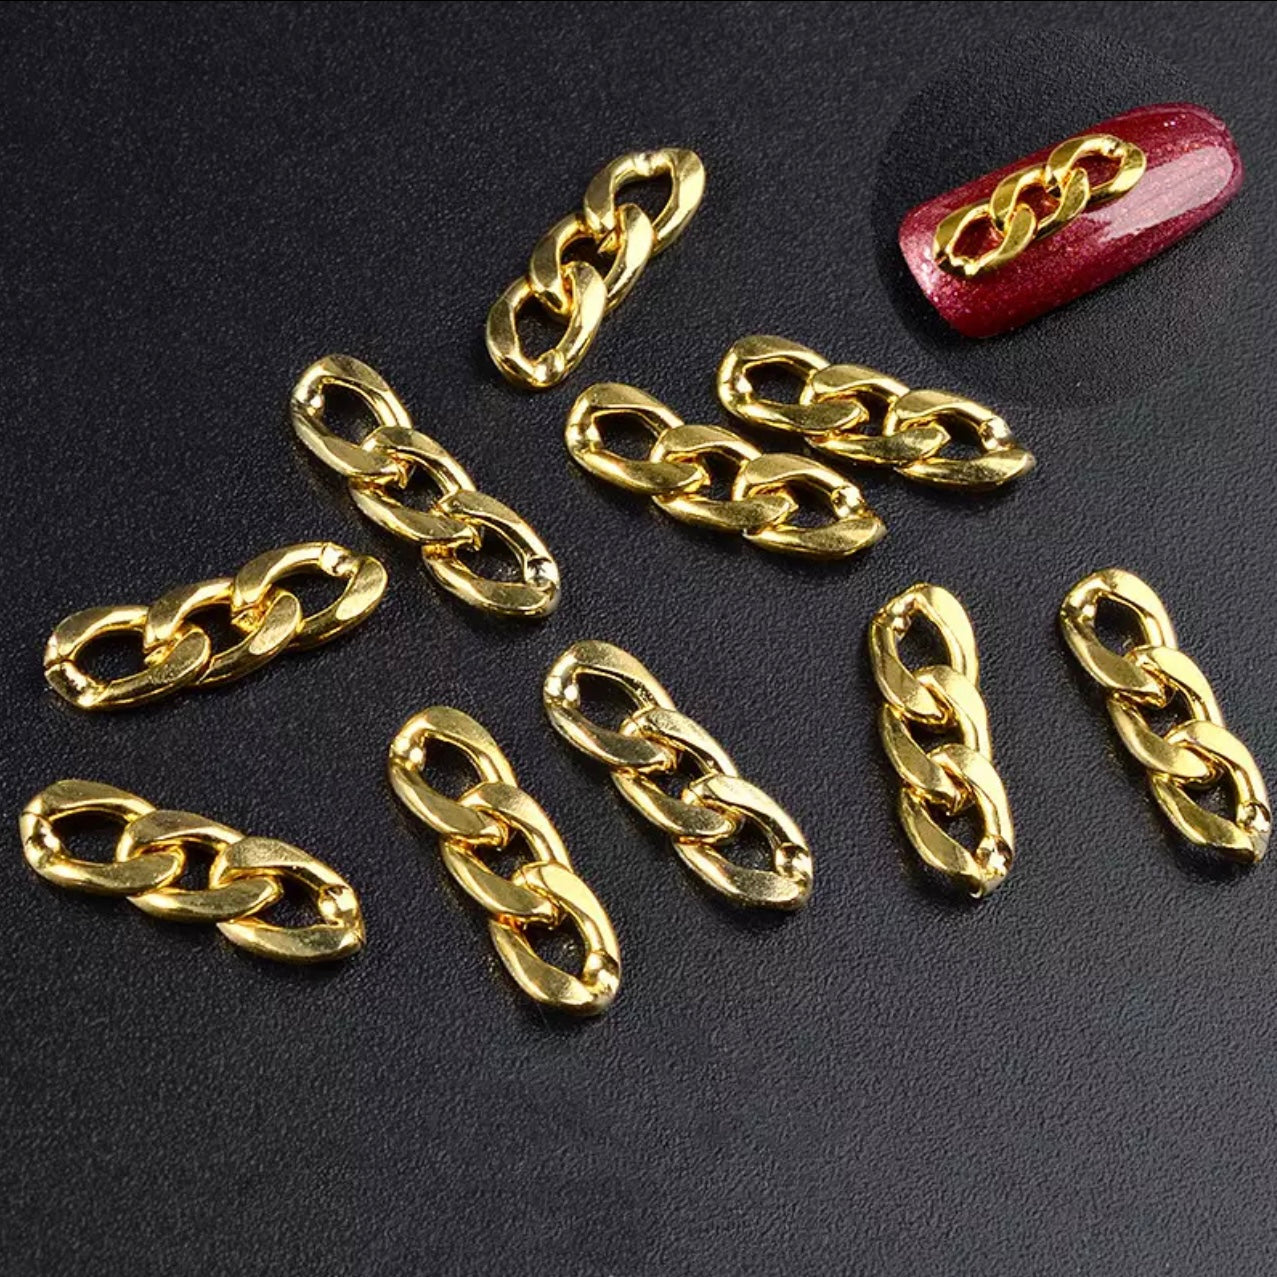 15pcs String Metal Nail Charm - Gold color